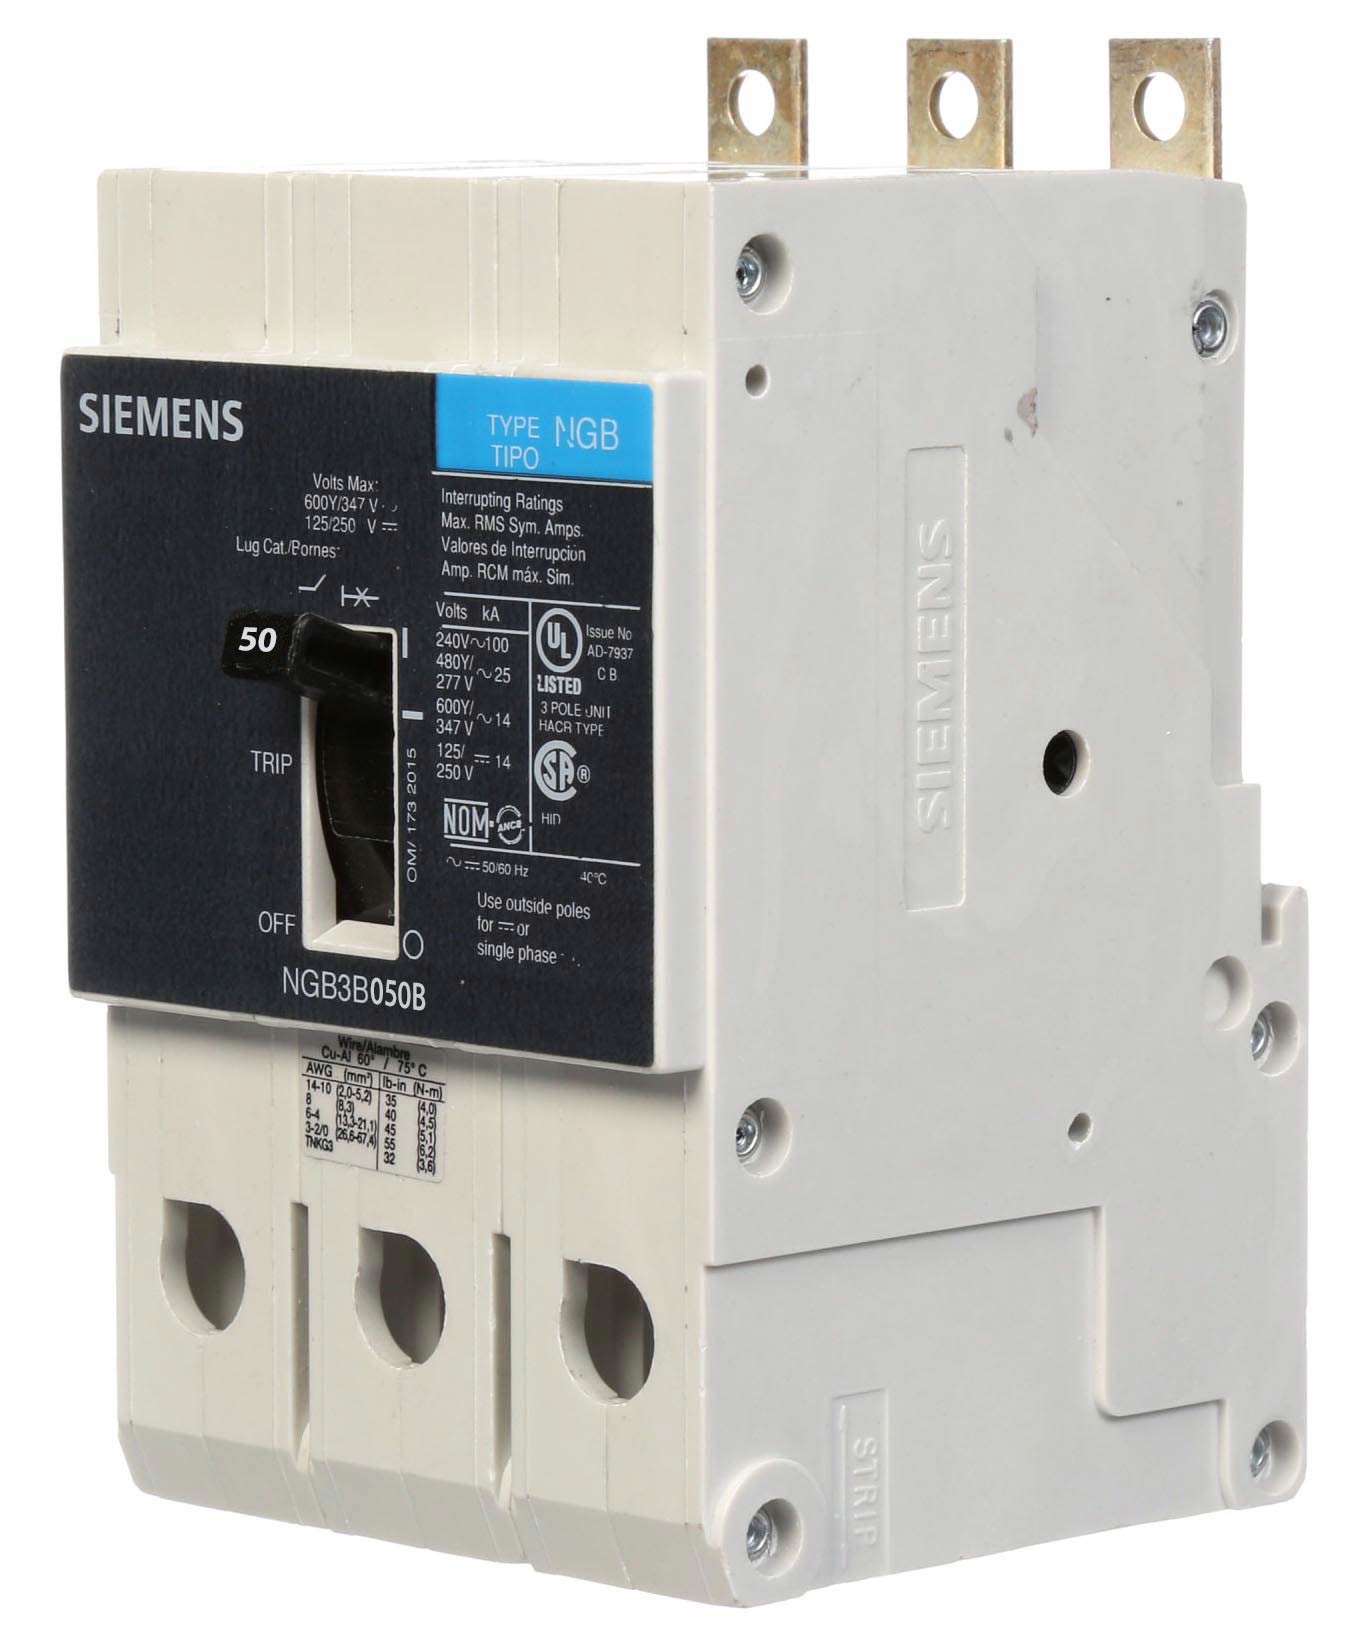 NGB3B050B - Siemens - Molded Case Circuit Breaker